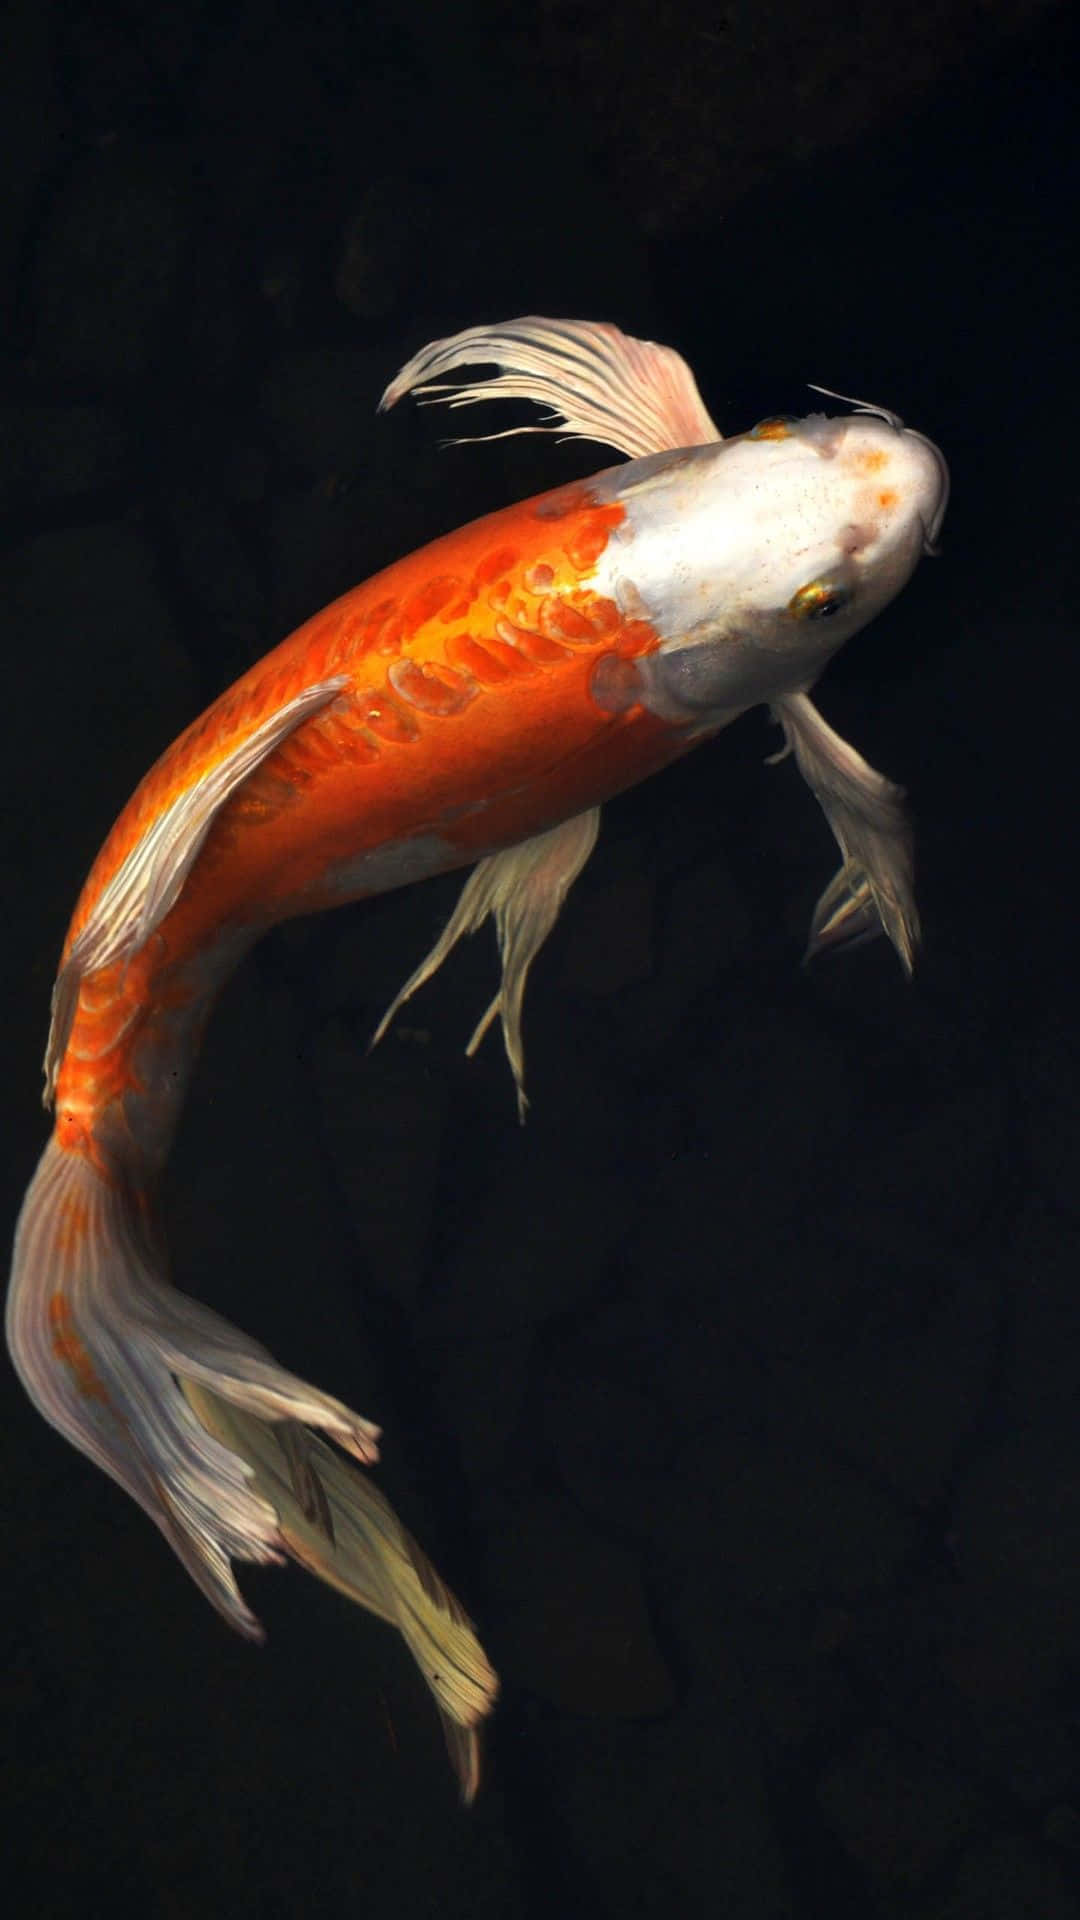 Live Koi Fish With Orange Spots Wallpaper